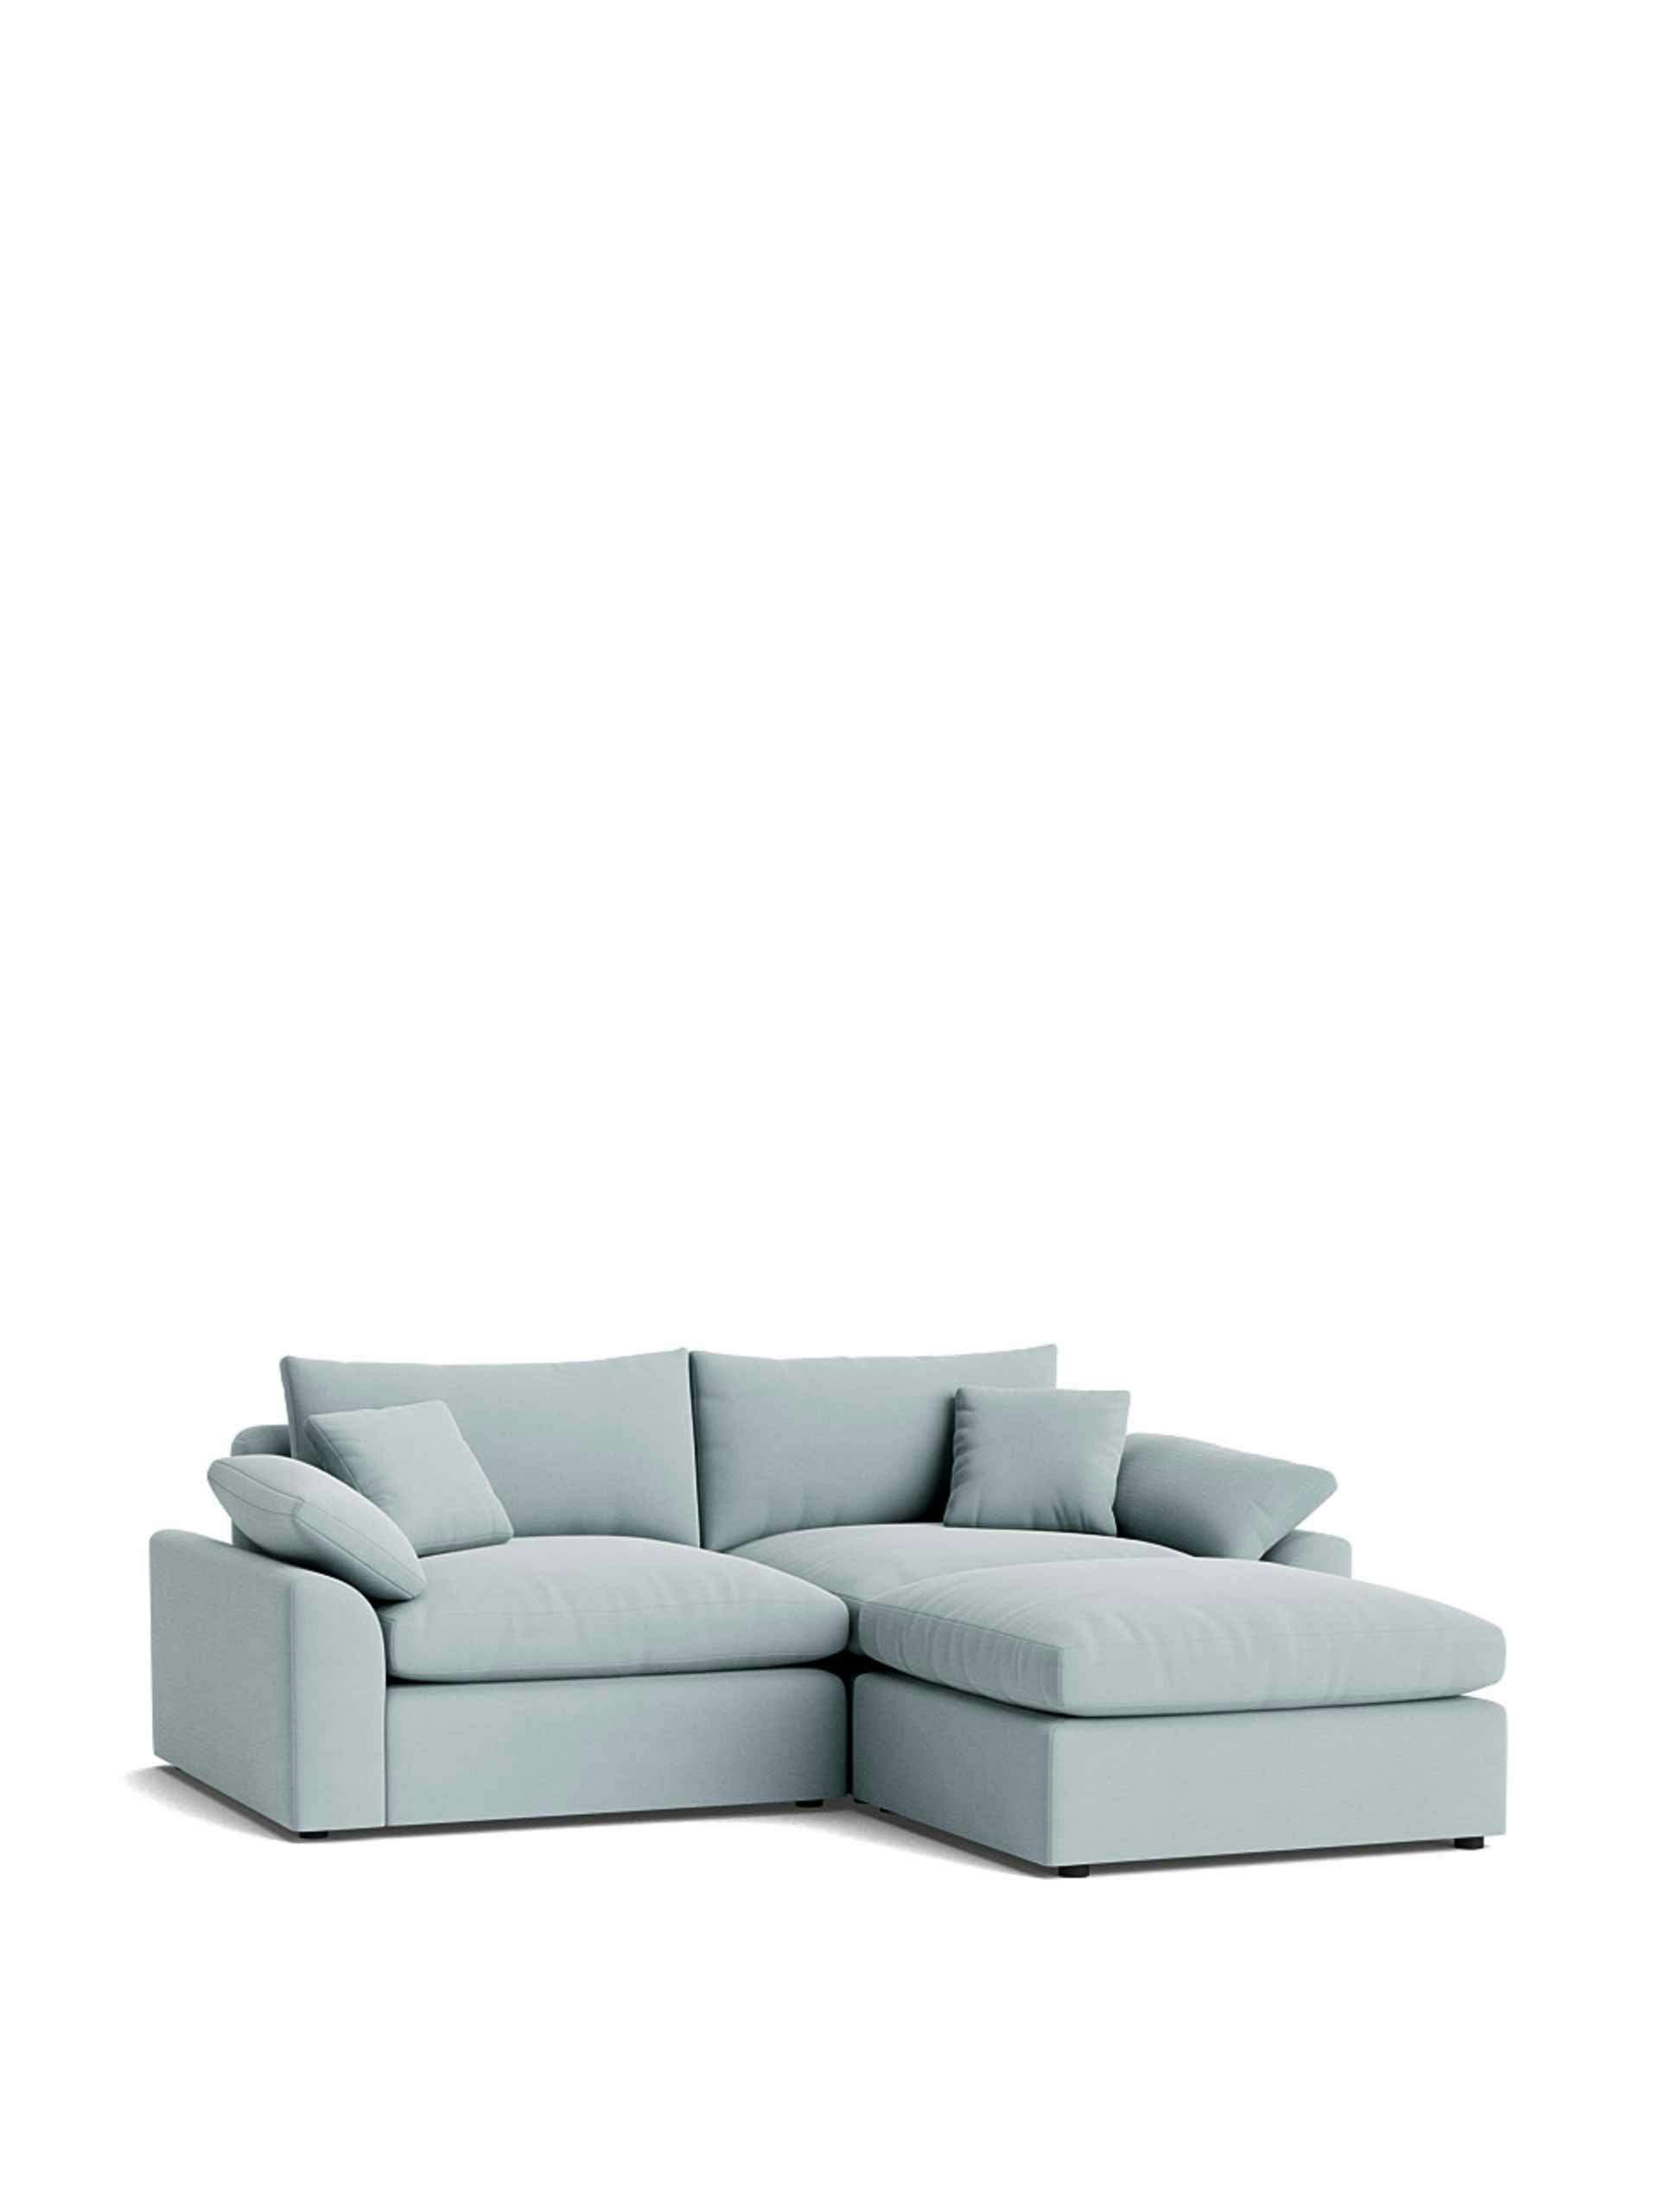 L-shaped chaise sofa